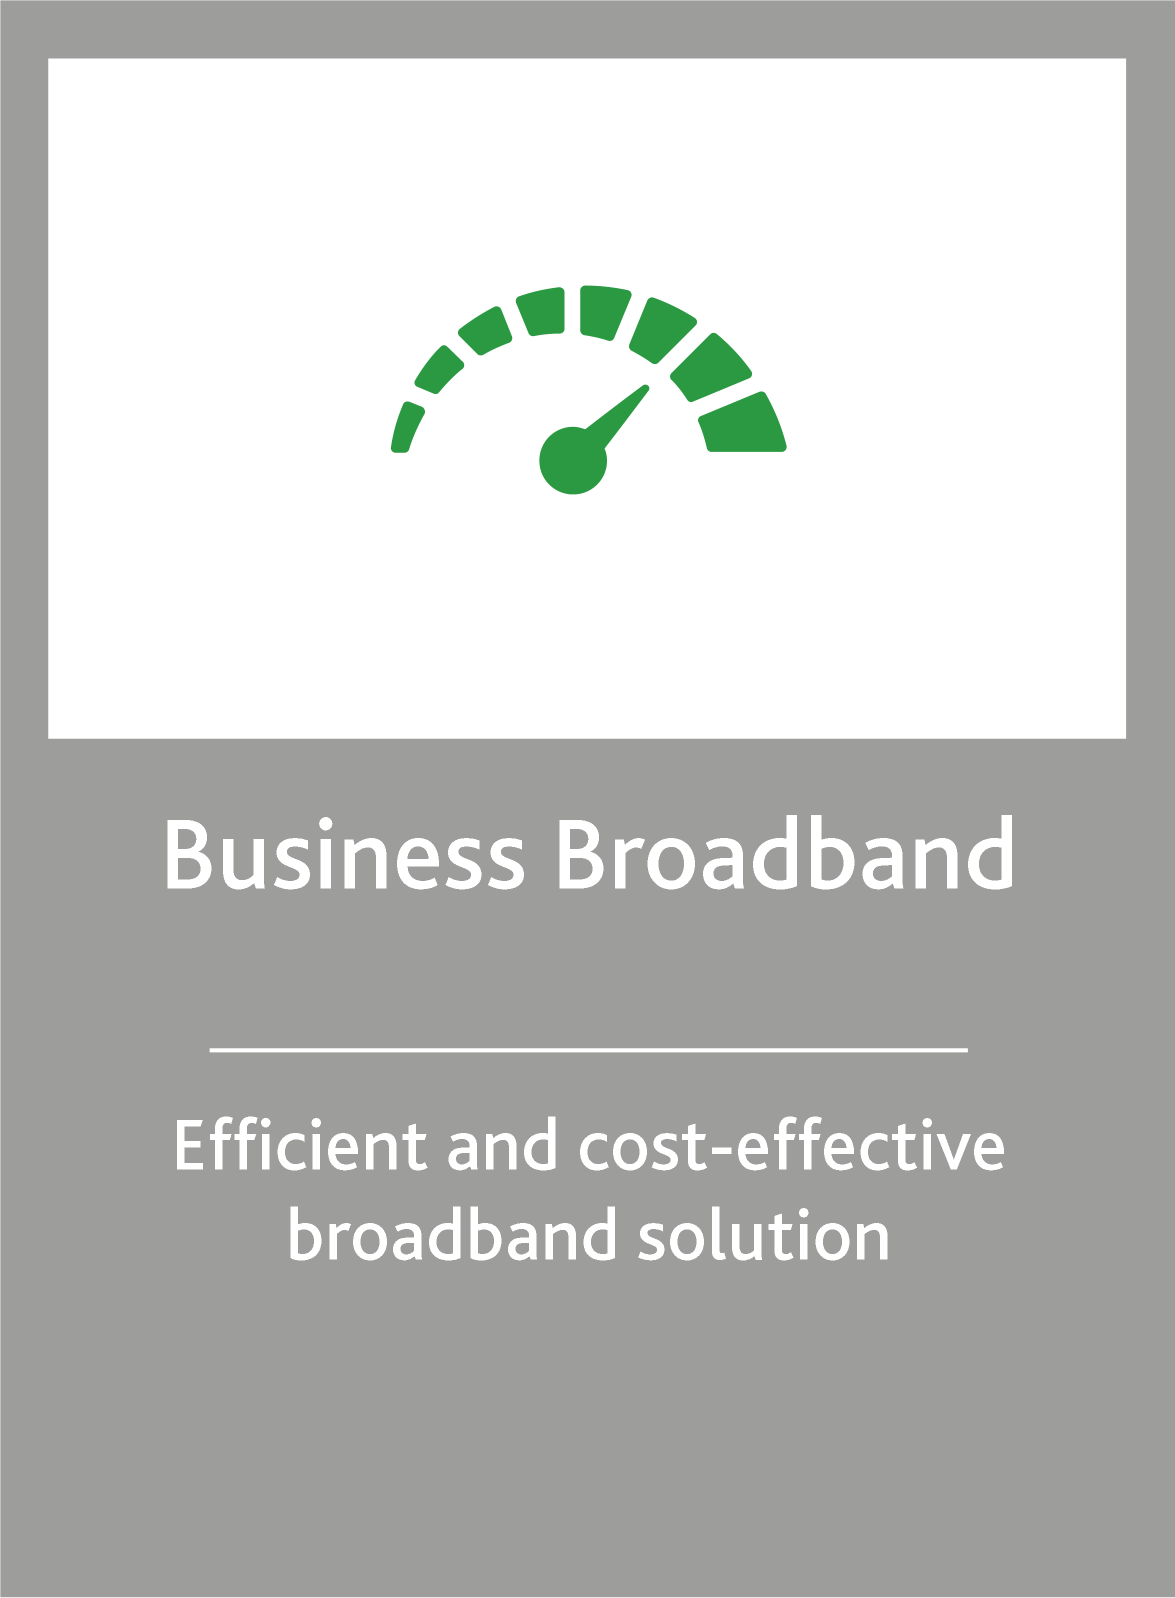 //kalaam-telecom.com/wp-content/uploads/2020/03/Business-Broadband.png